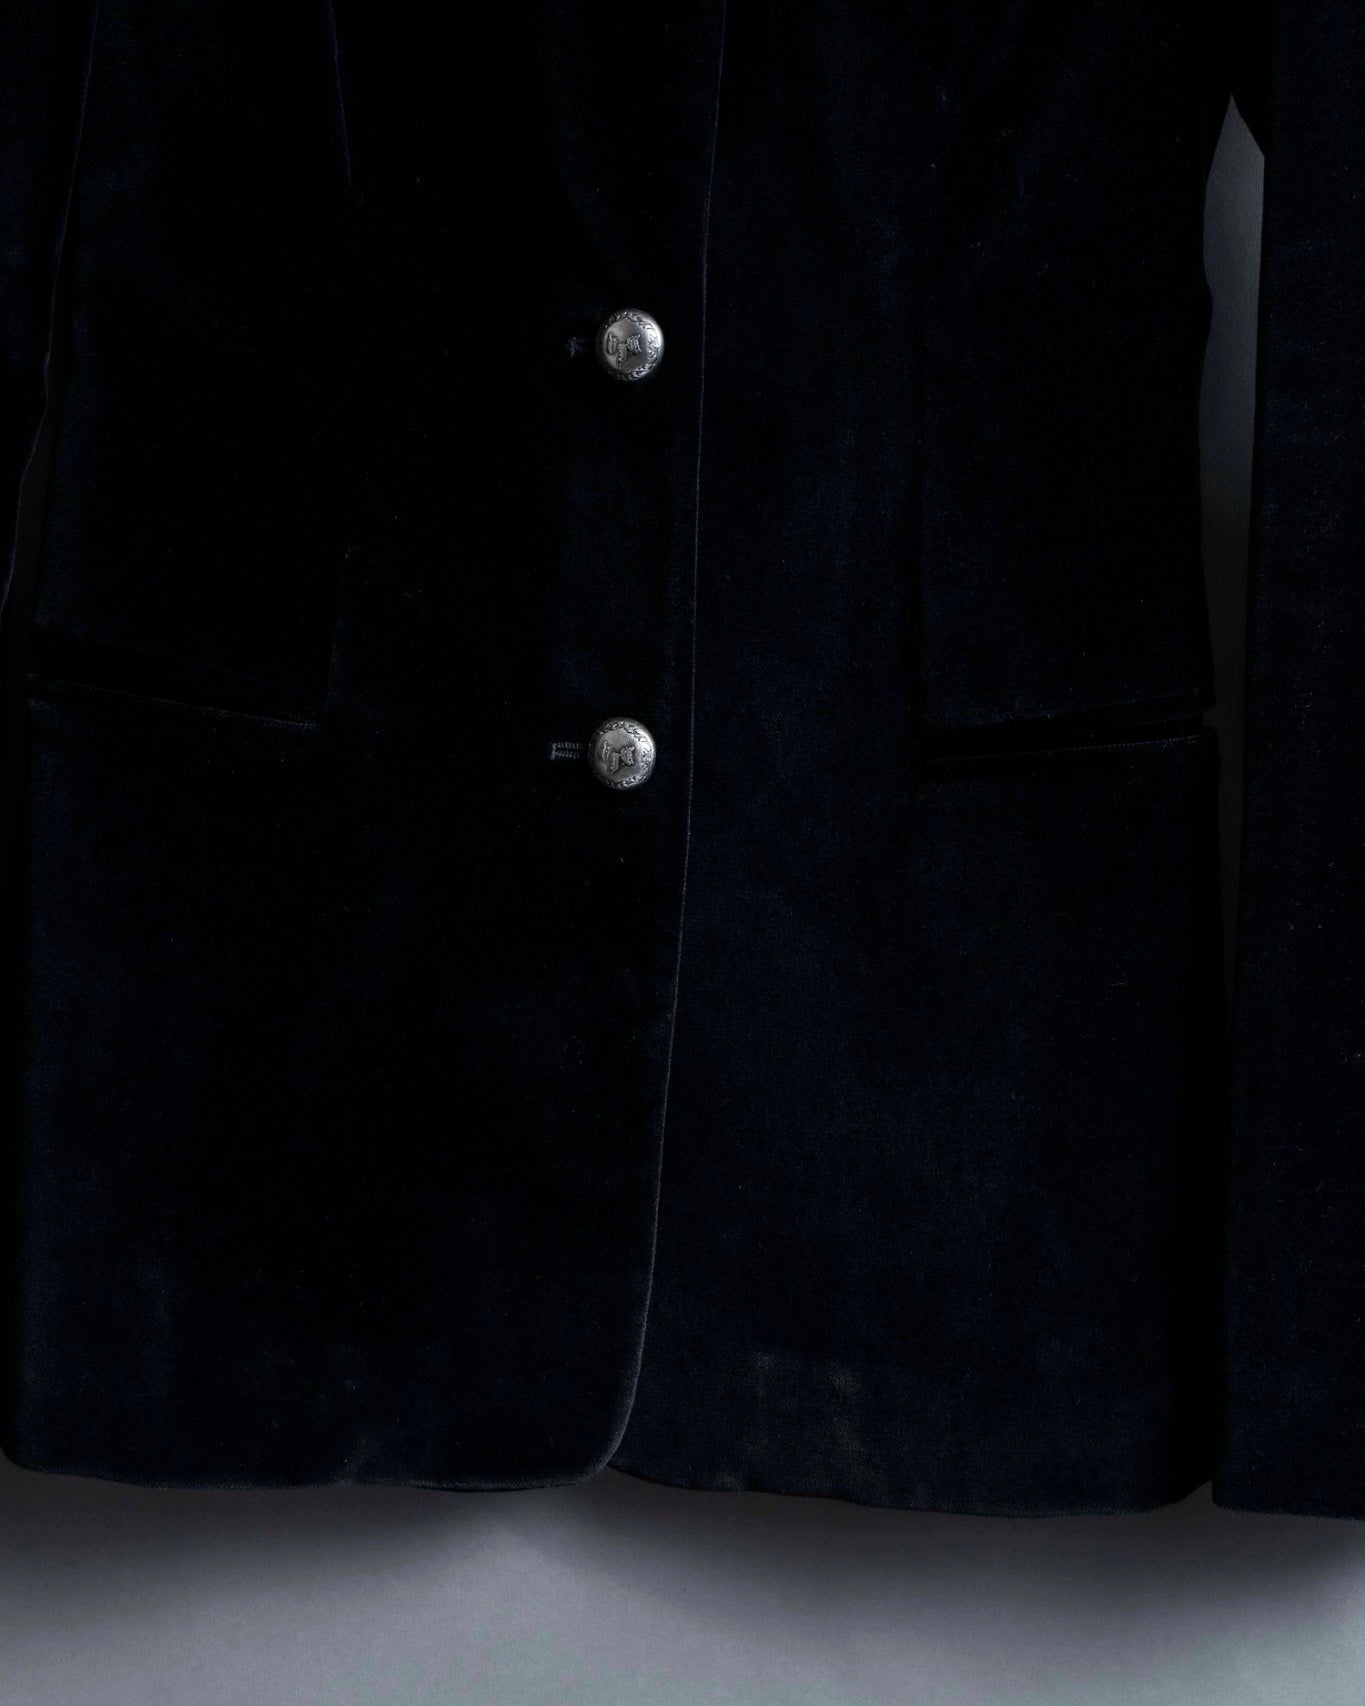 "VERSACE JEANS COUTURE" Velor peak lapel tailored jacket